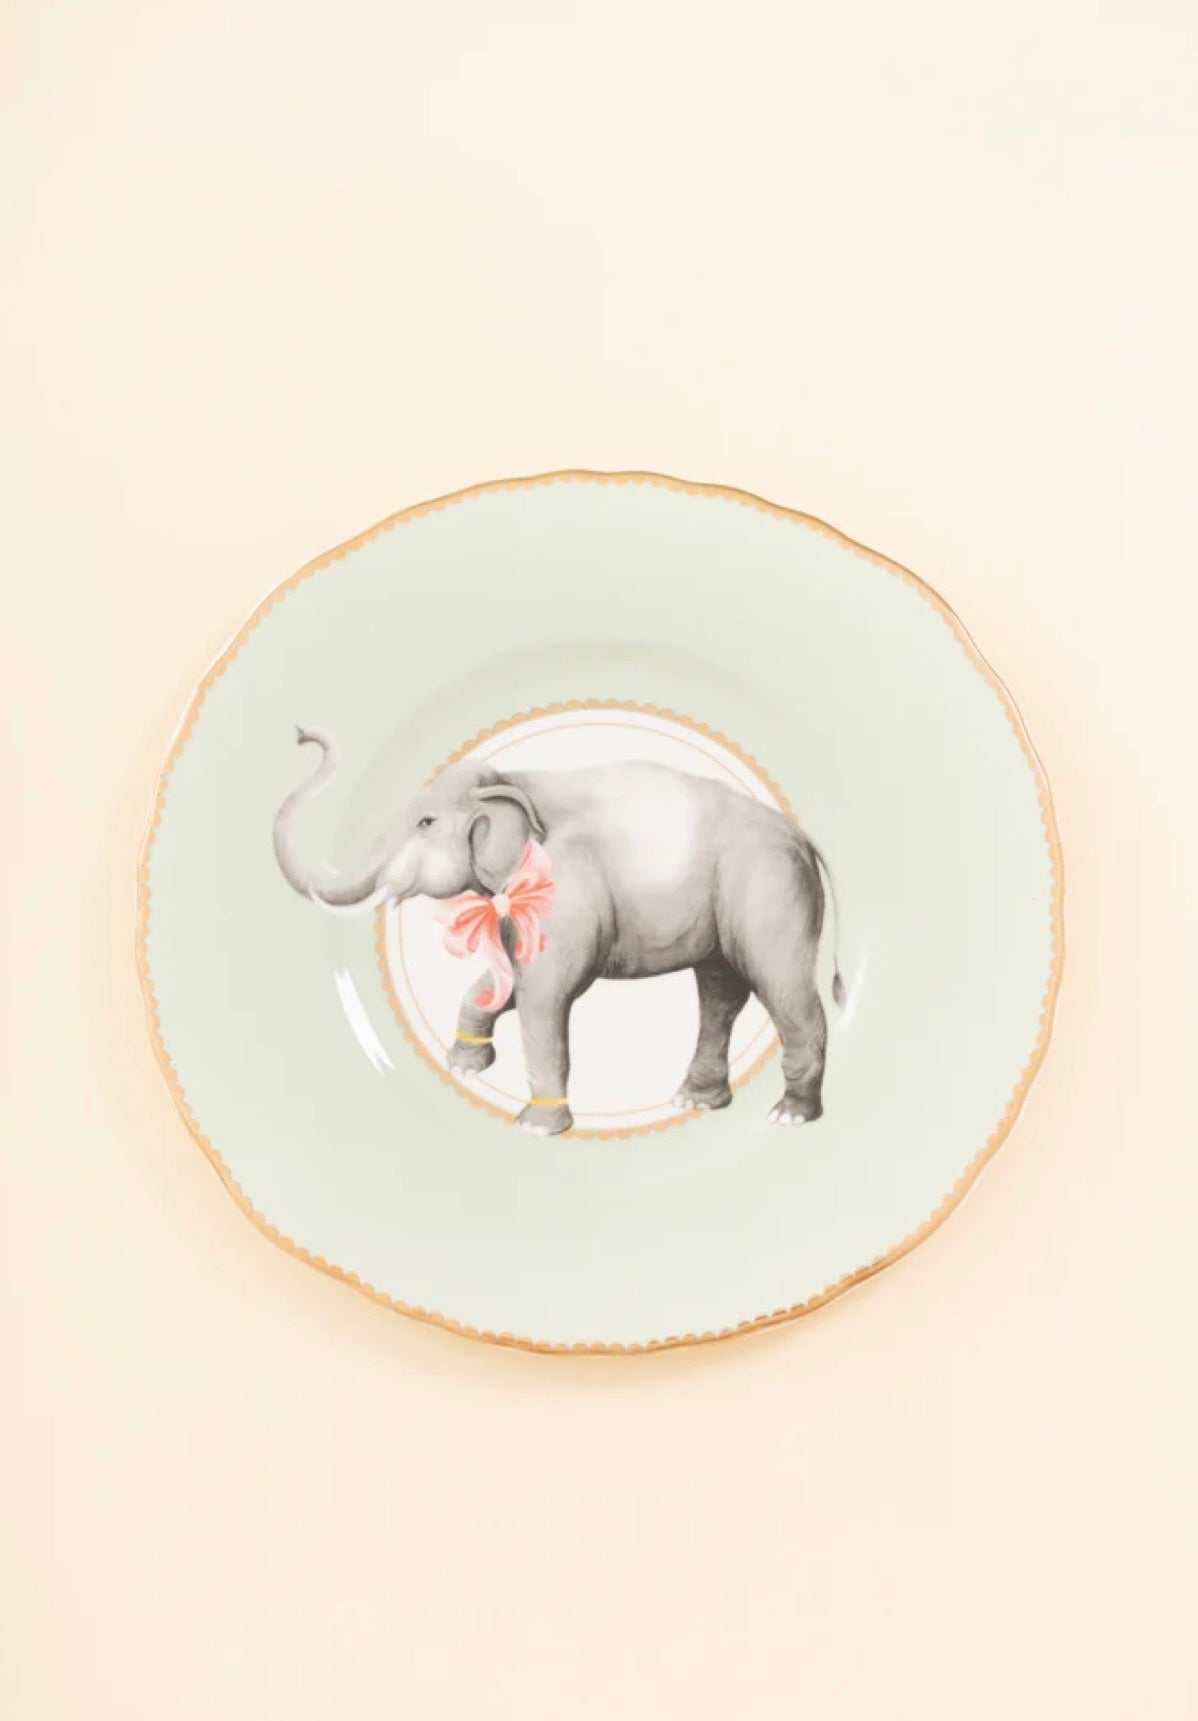 Elephant plate 23 cm